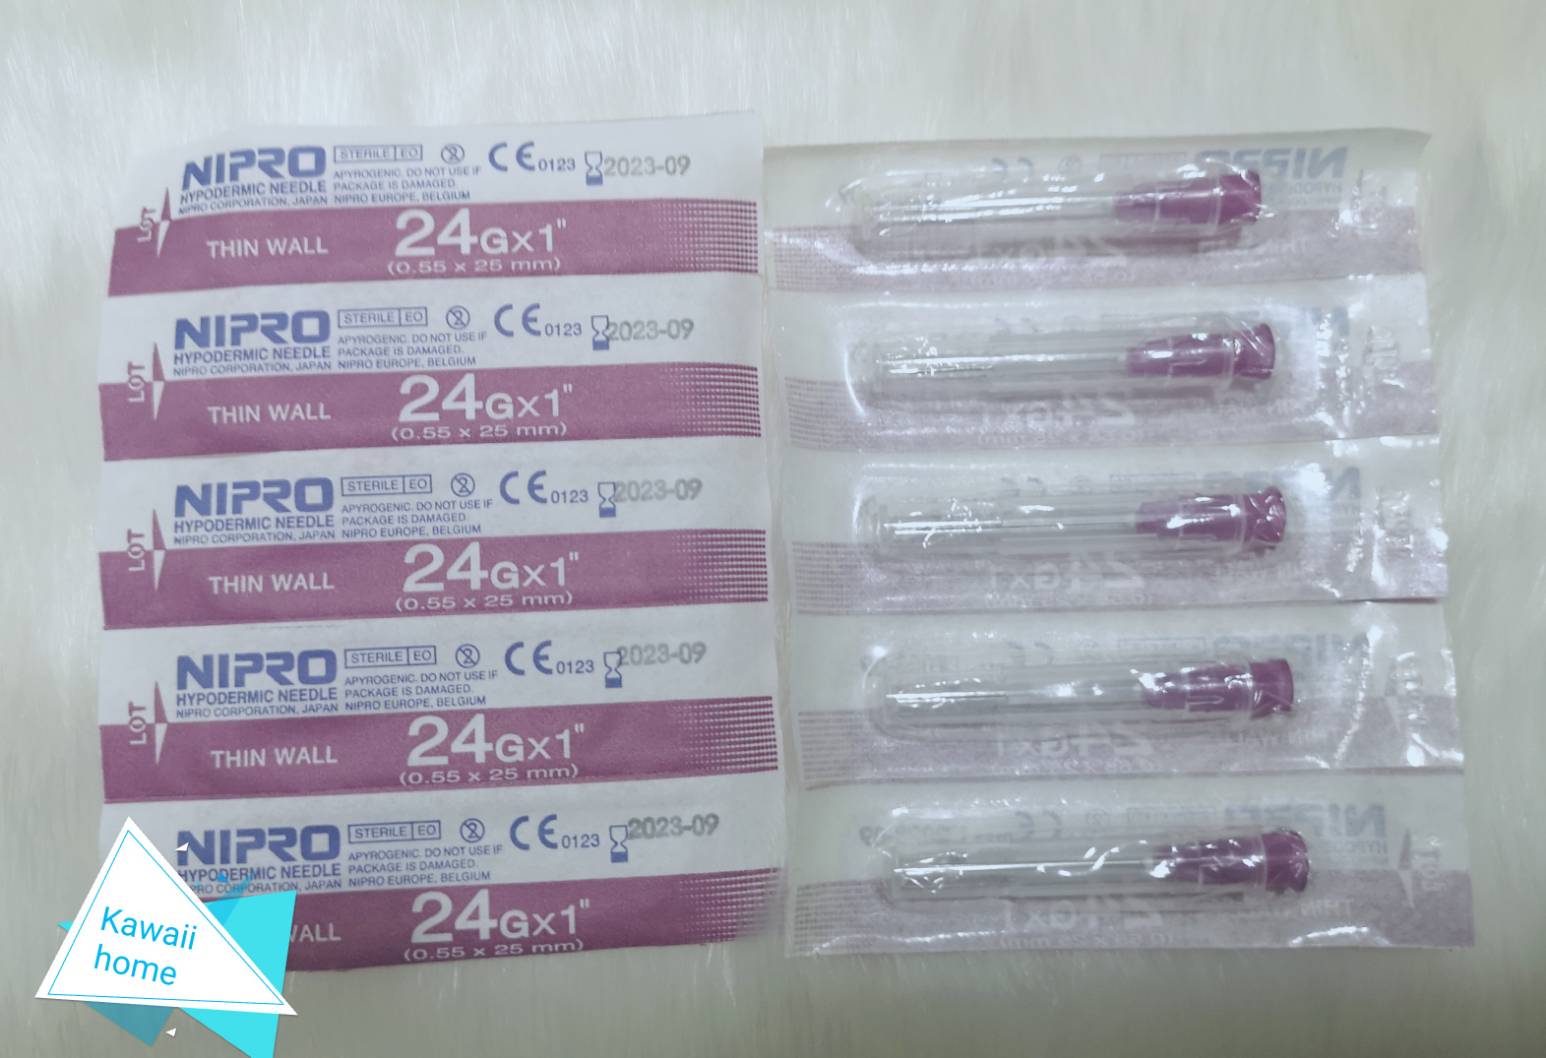 (I15) เข็มฉีดยา ขนาด 24 (0.55 x 25 mm_สีชมพูเข้ม) สำหรับฉีดยา วัคซีน สัตว์เลี้ยง (จำนวน 10 ชิ้น)